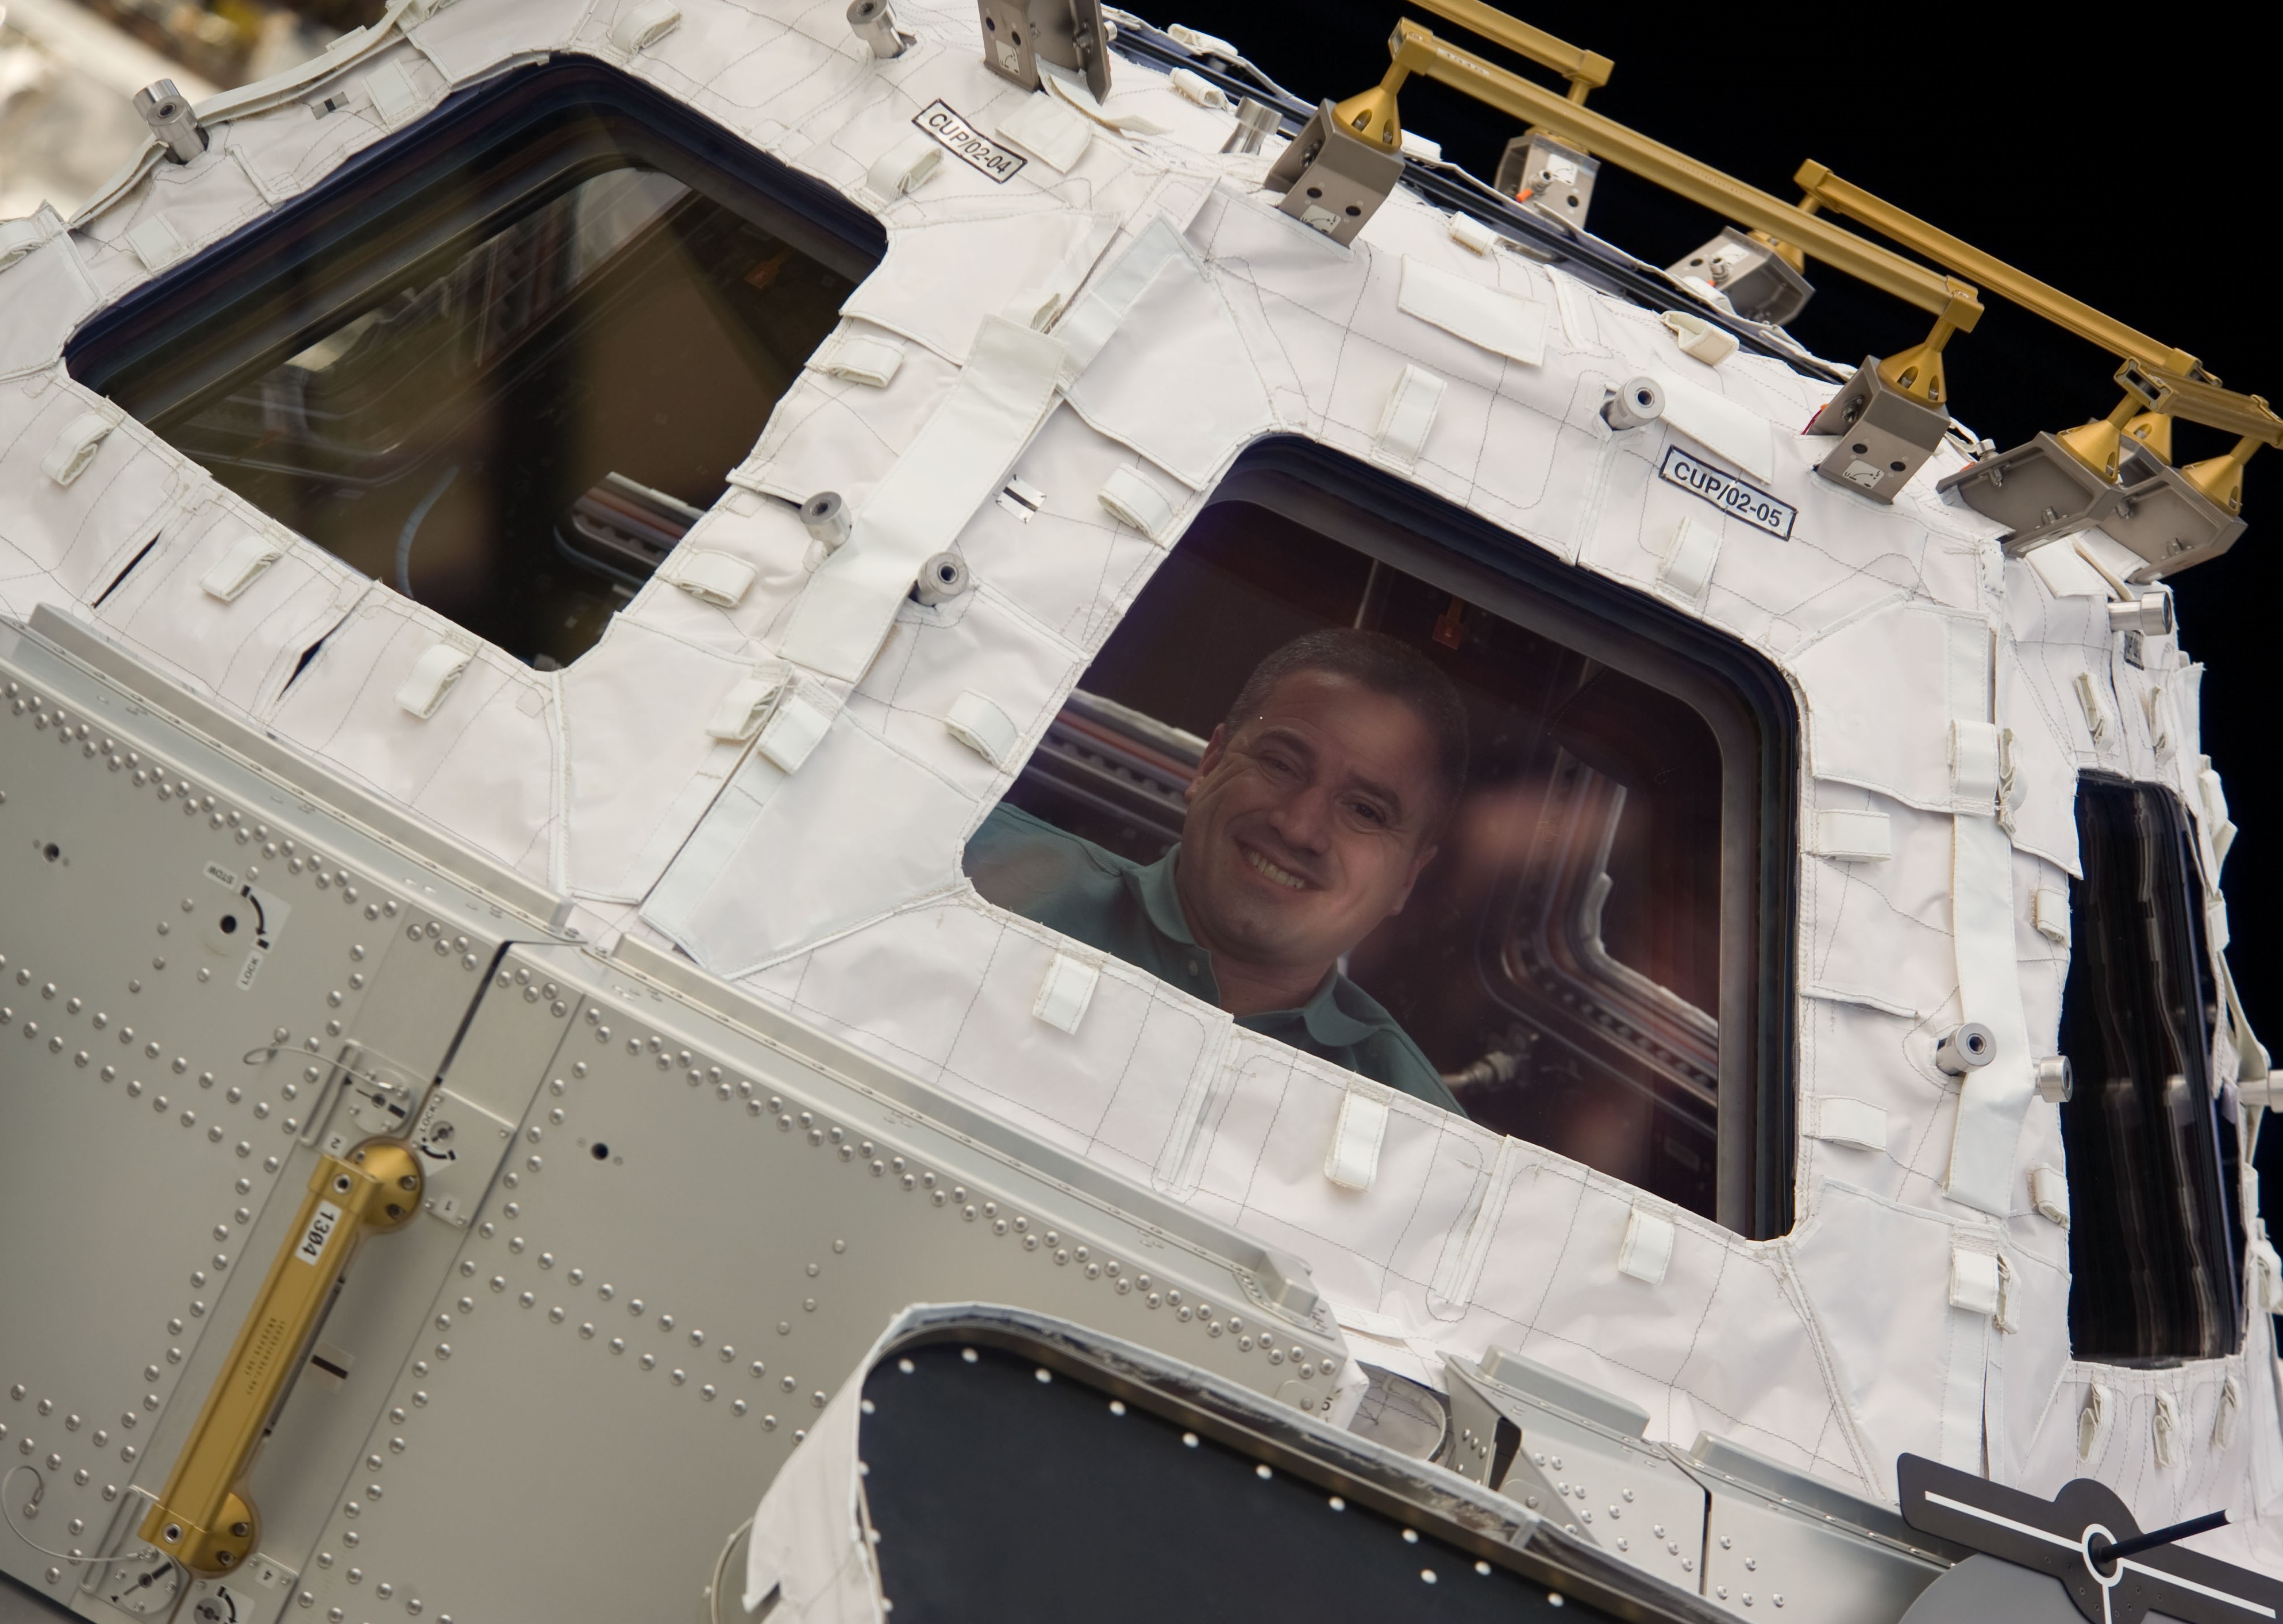 NASA astronaut George D. Zamka peering through one of the Cupola’s windows